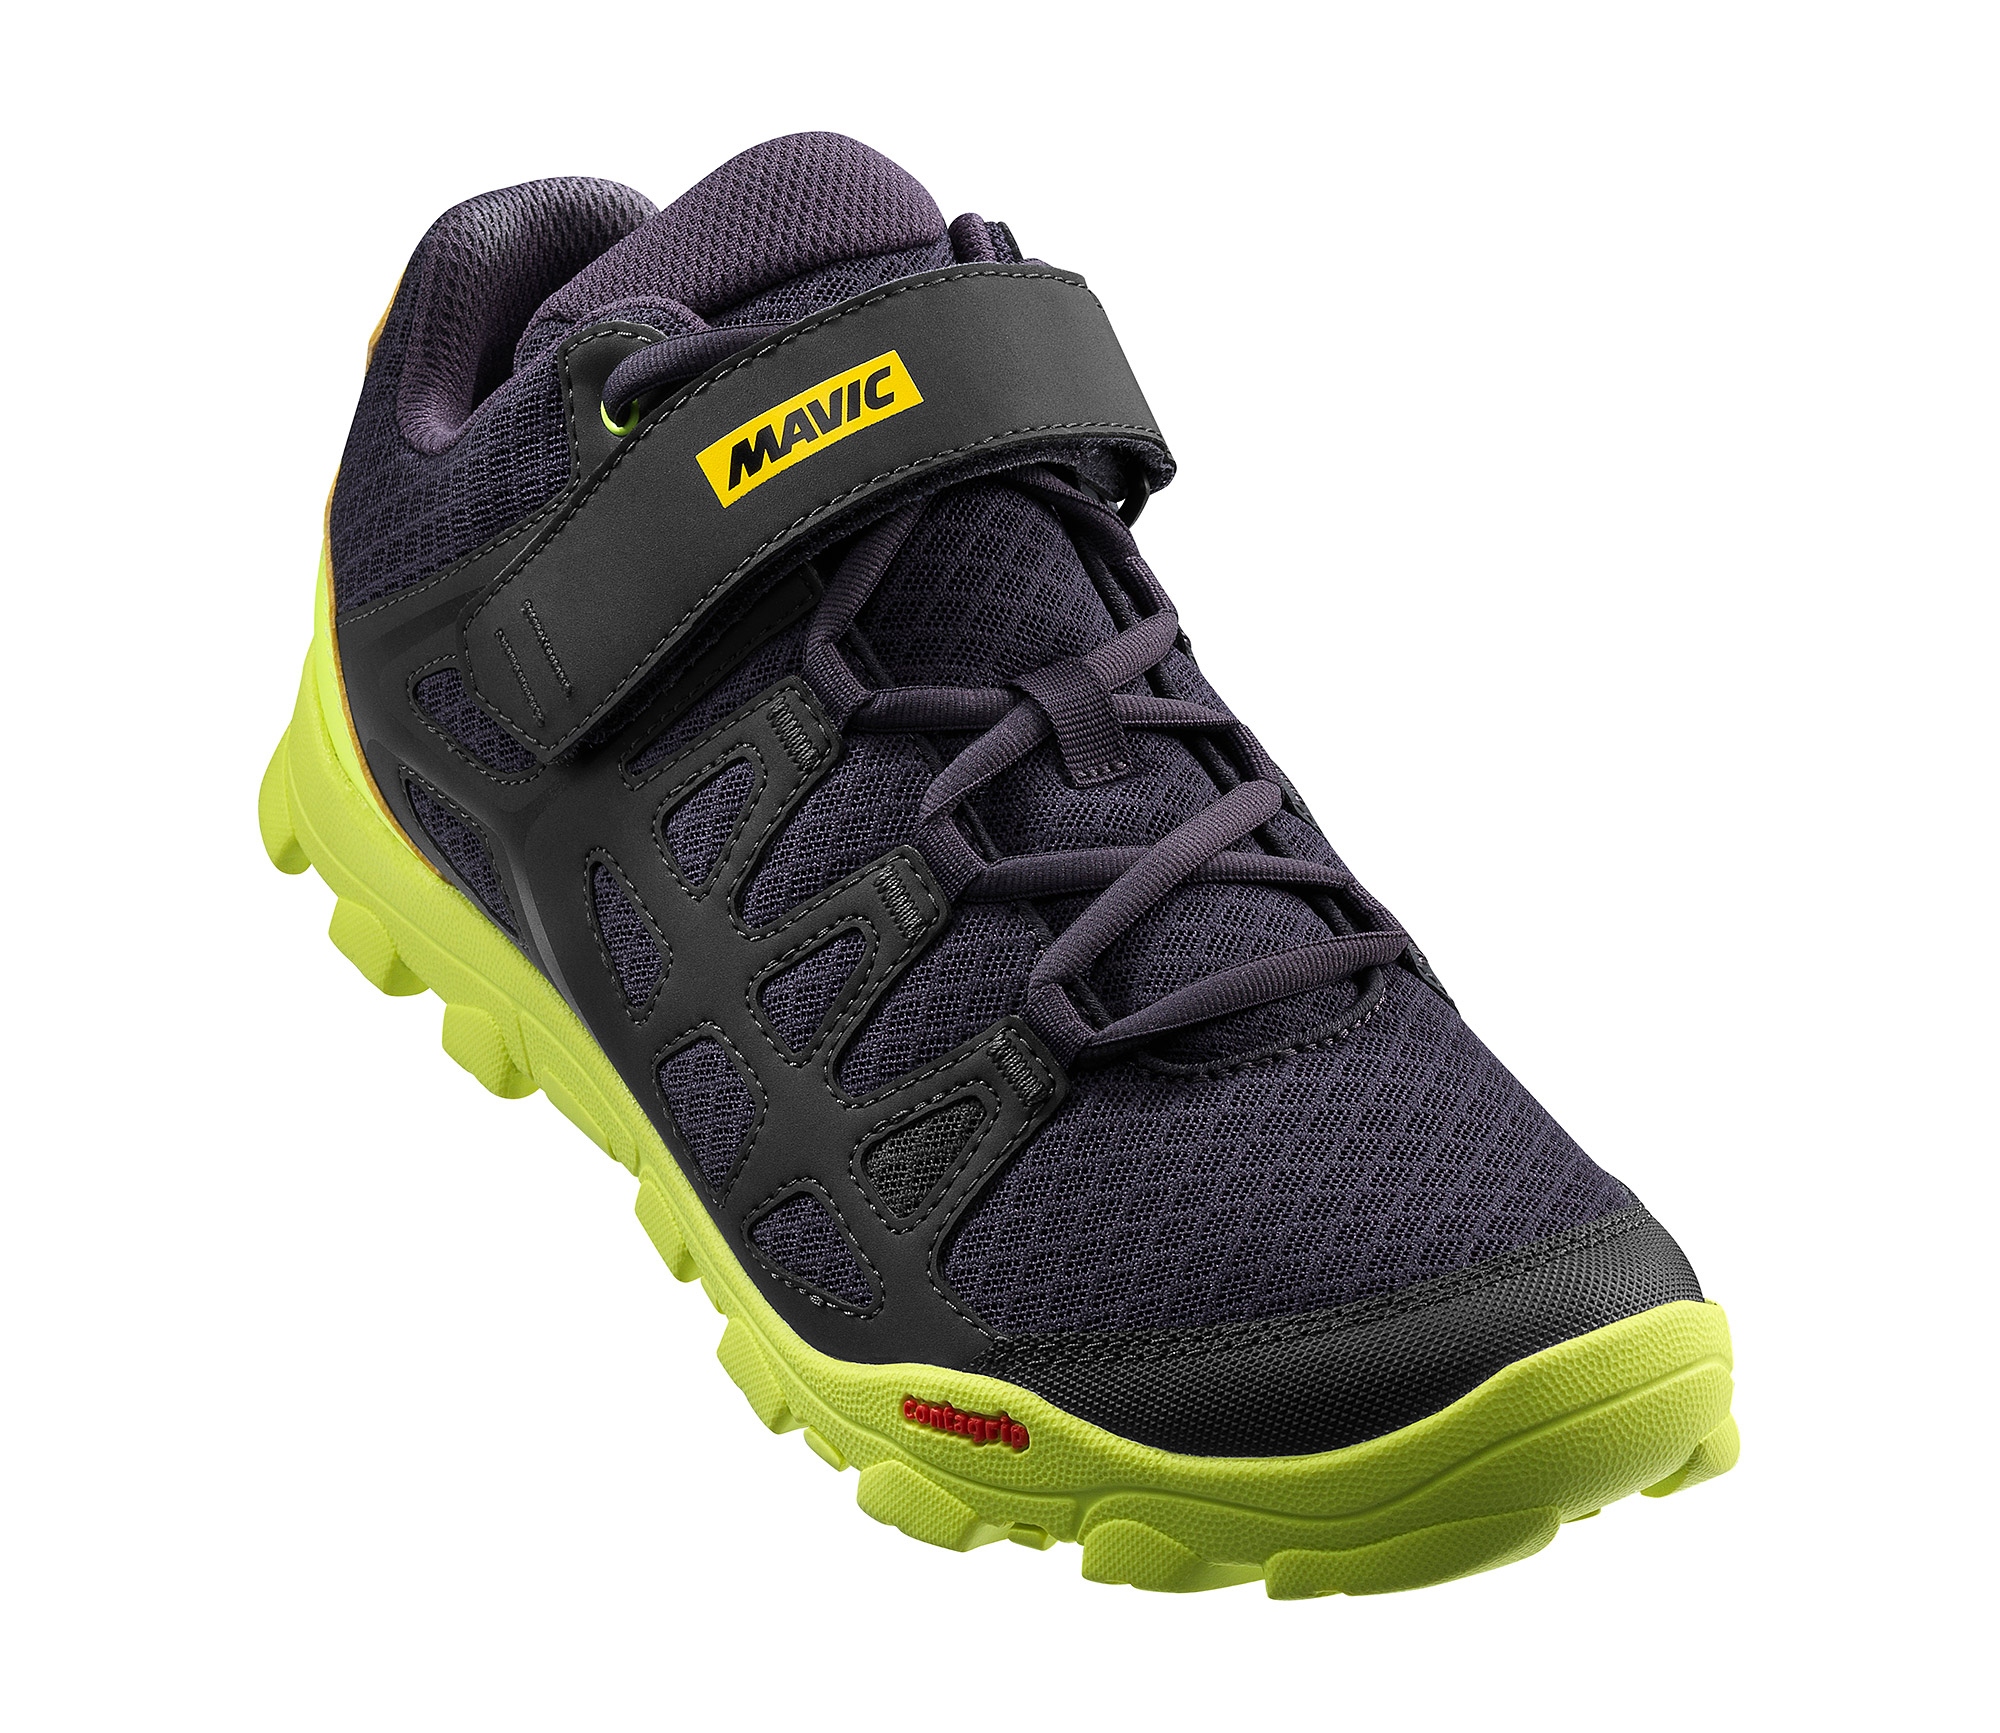 Взуття Mavic CROSSRIDE, розмір UK 12,5 (48, 303мм) Pirate Black/Safety Yellow чорно-жовта